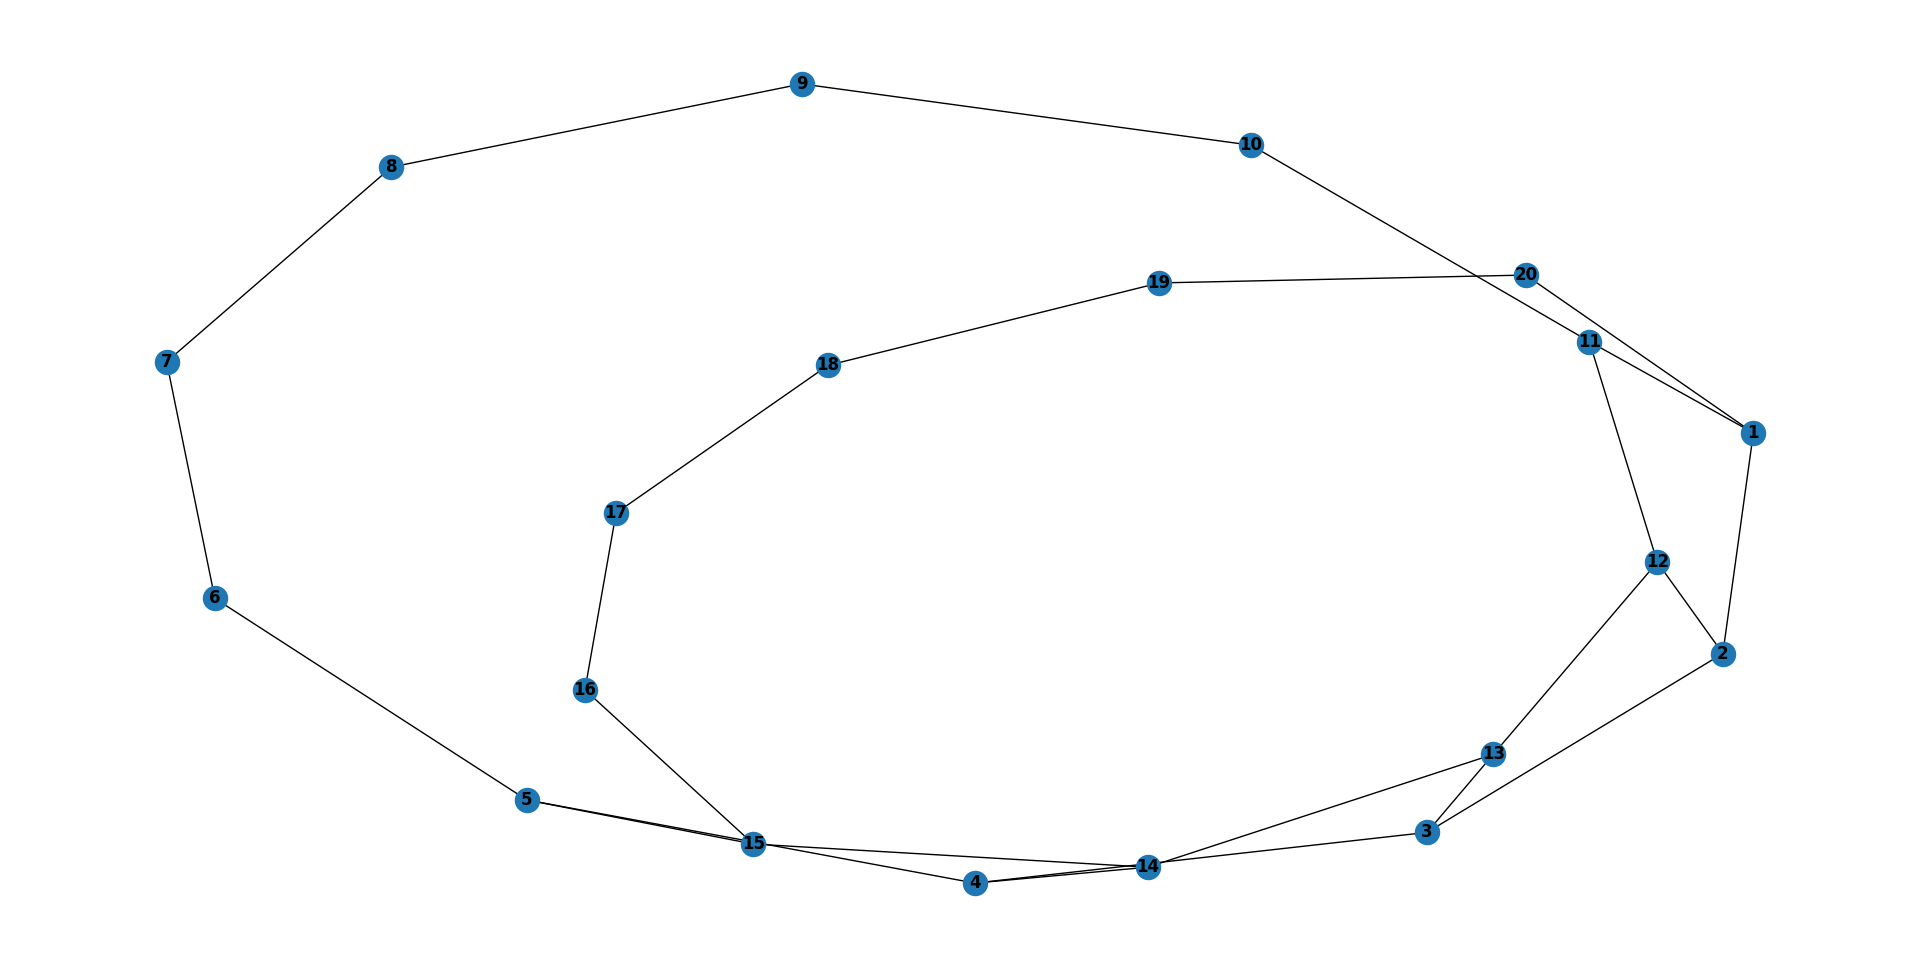 dijkstra's graph algorithm